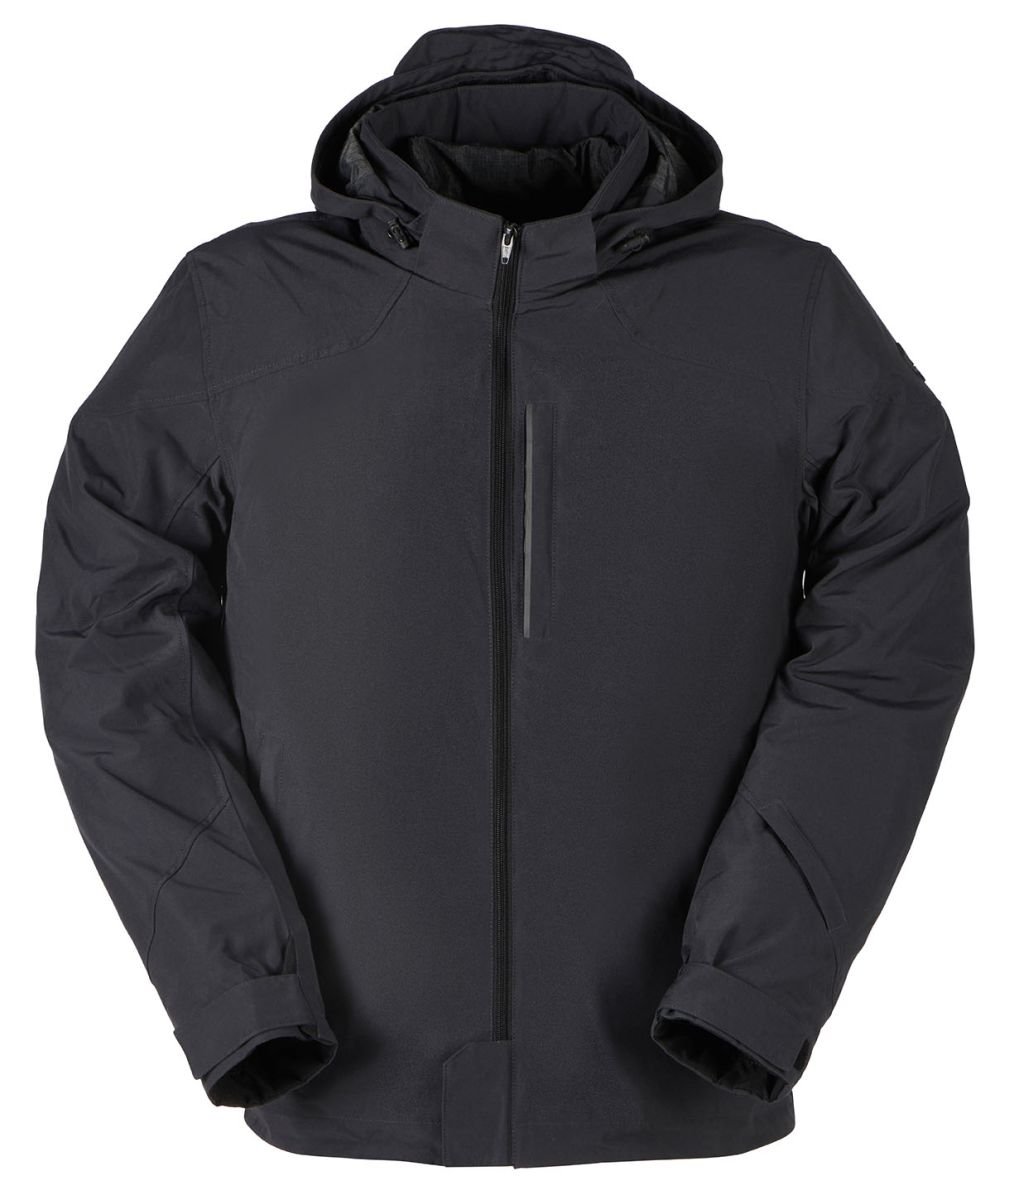 Image of Furygan London Evo 2 Jacket Gray Anthracite Size L EN